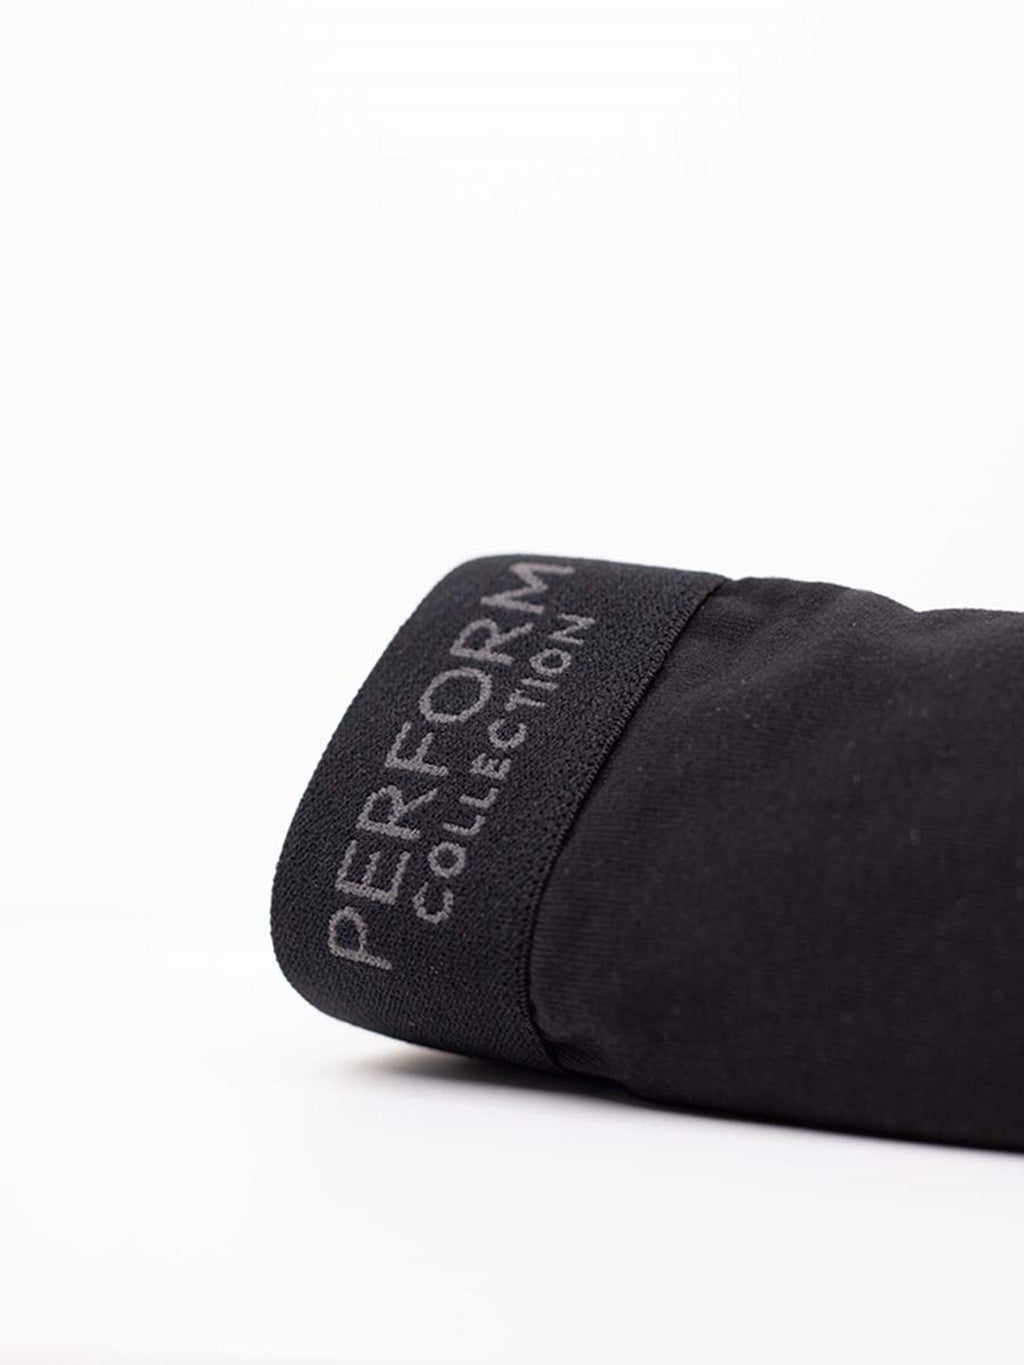 Performance Underpants (3 pack) - Black